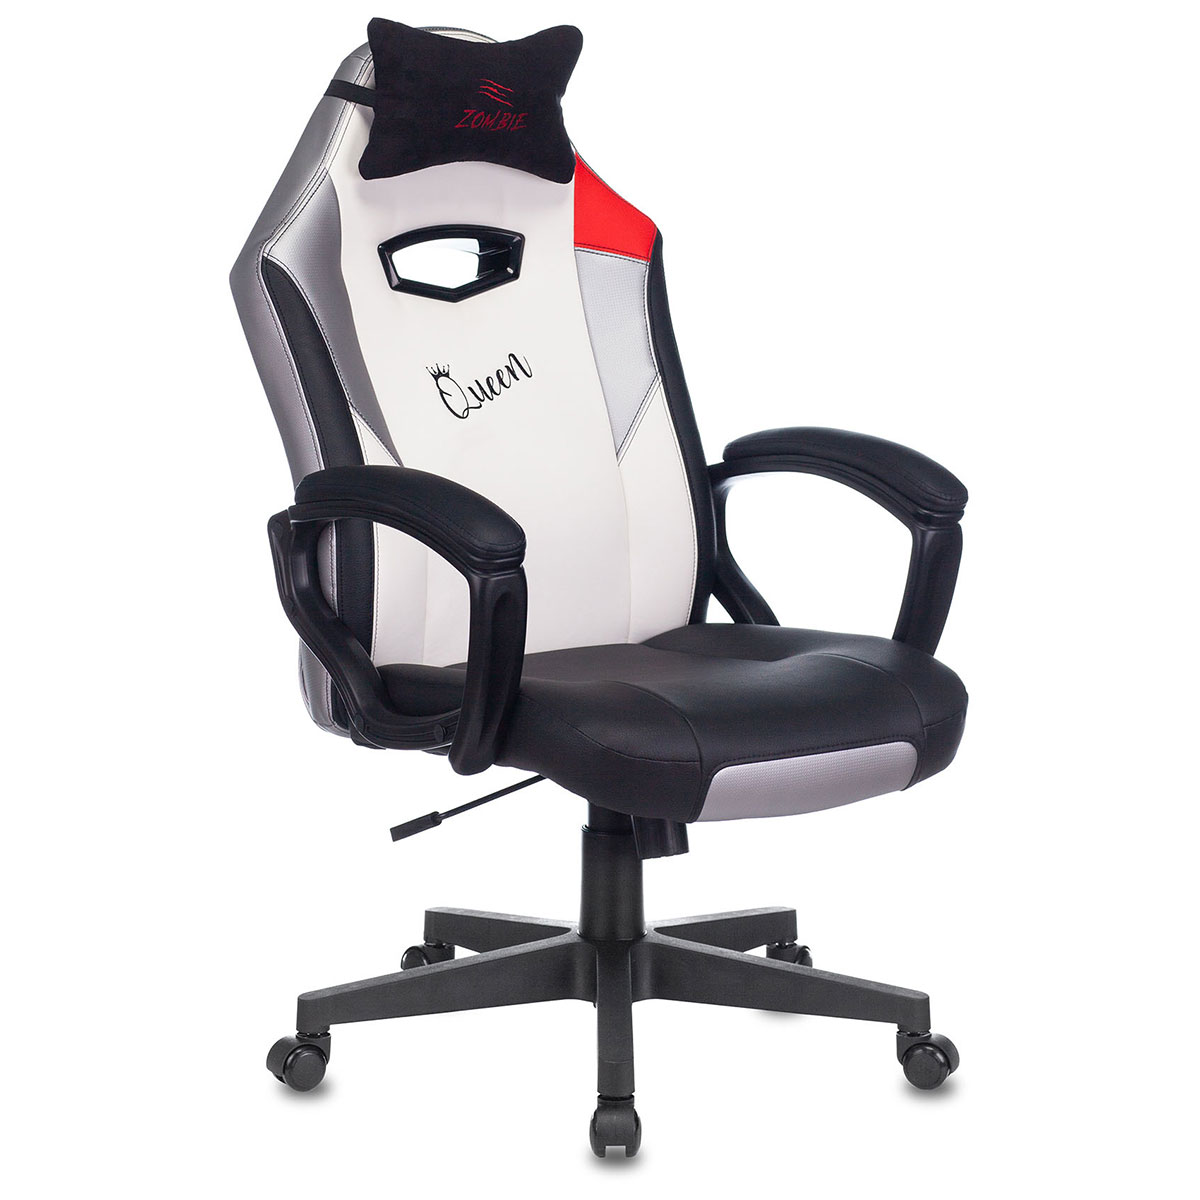 Кресло компьютерное зомби. Игровое кресло Zombie. Кресло геймера зомби. Компьютерный стул зомби. Кинг Квин кресло.